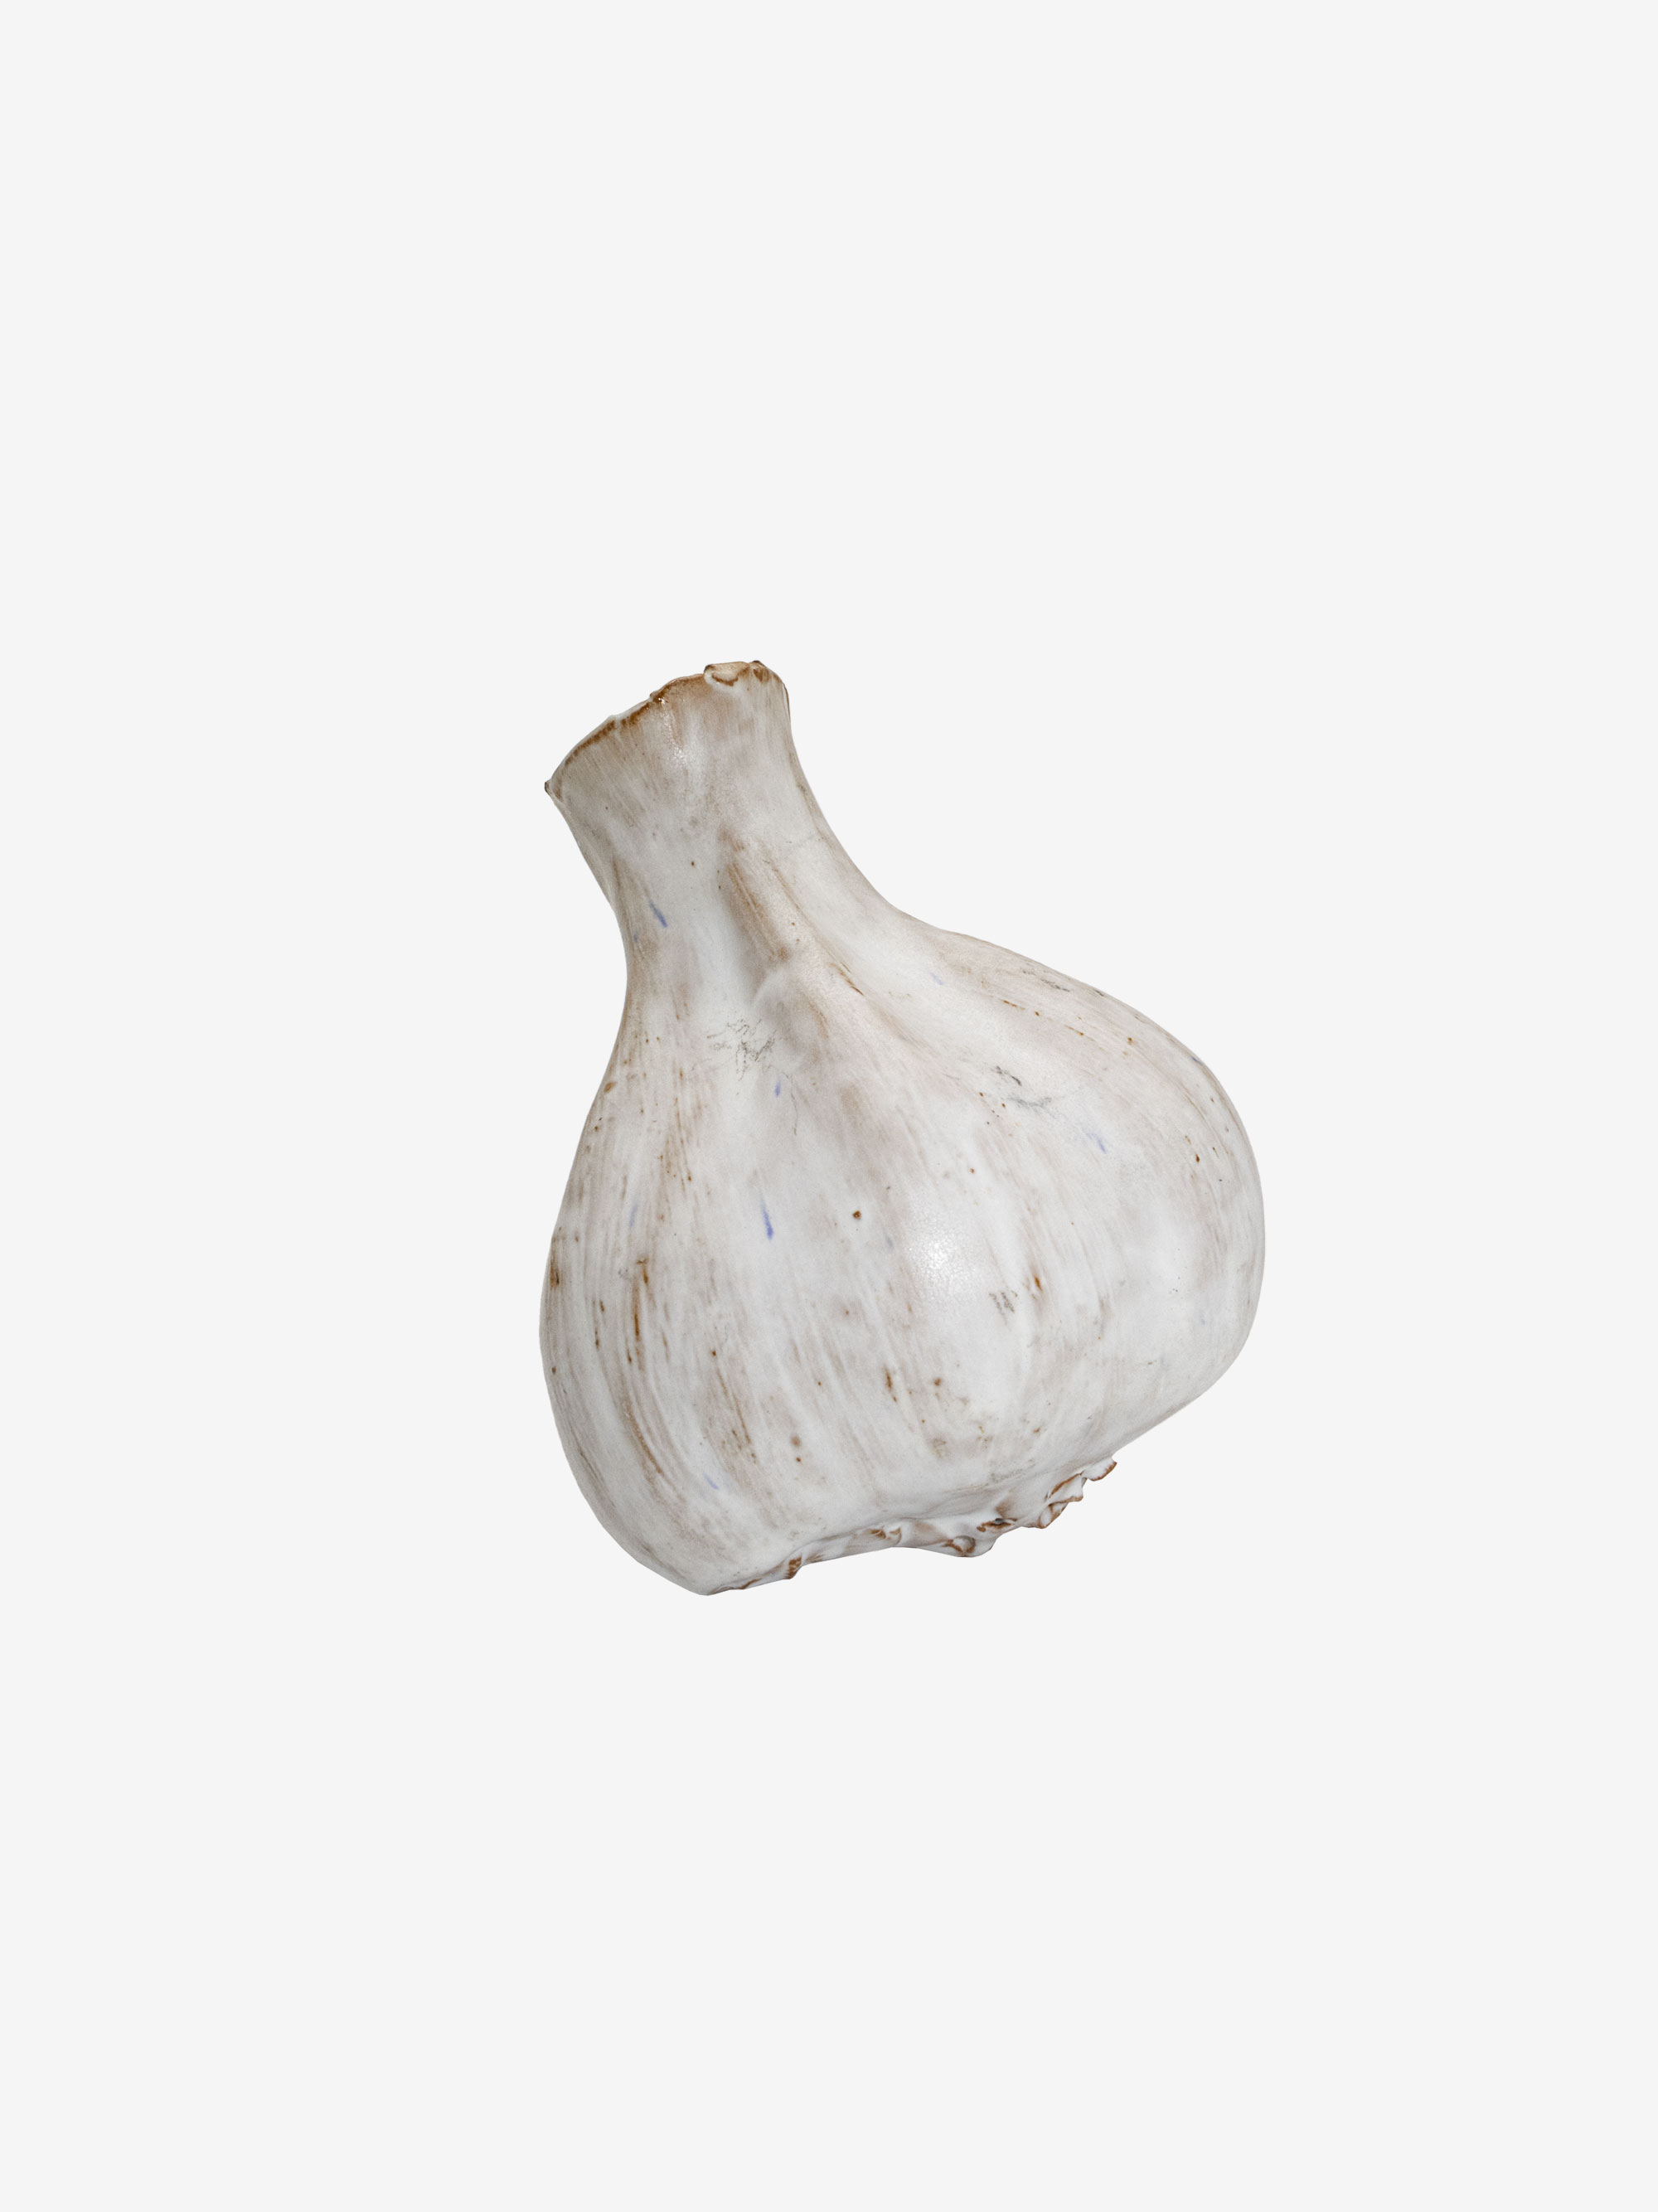 Onion Vase